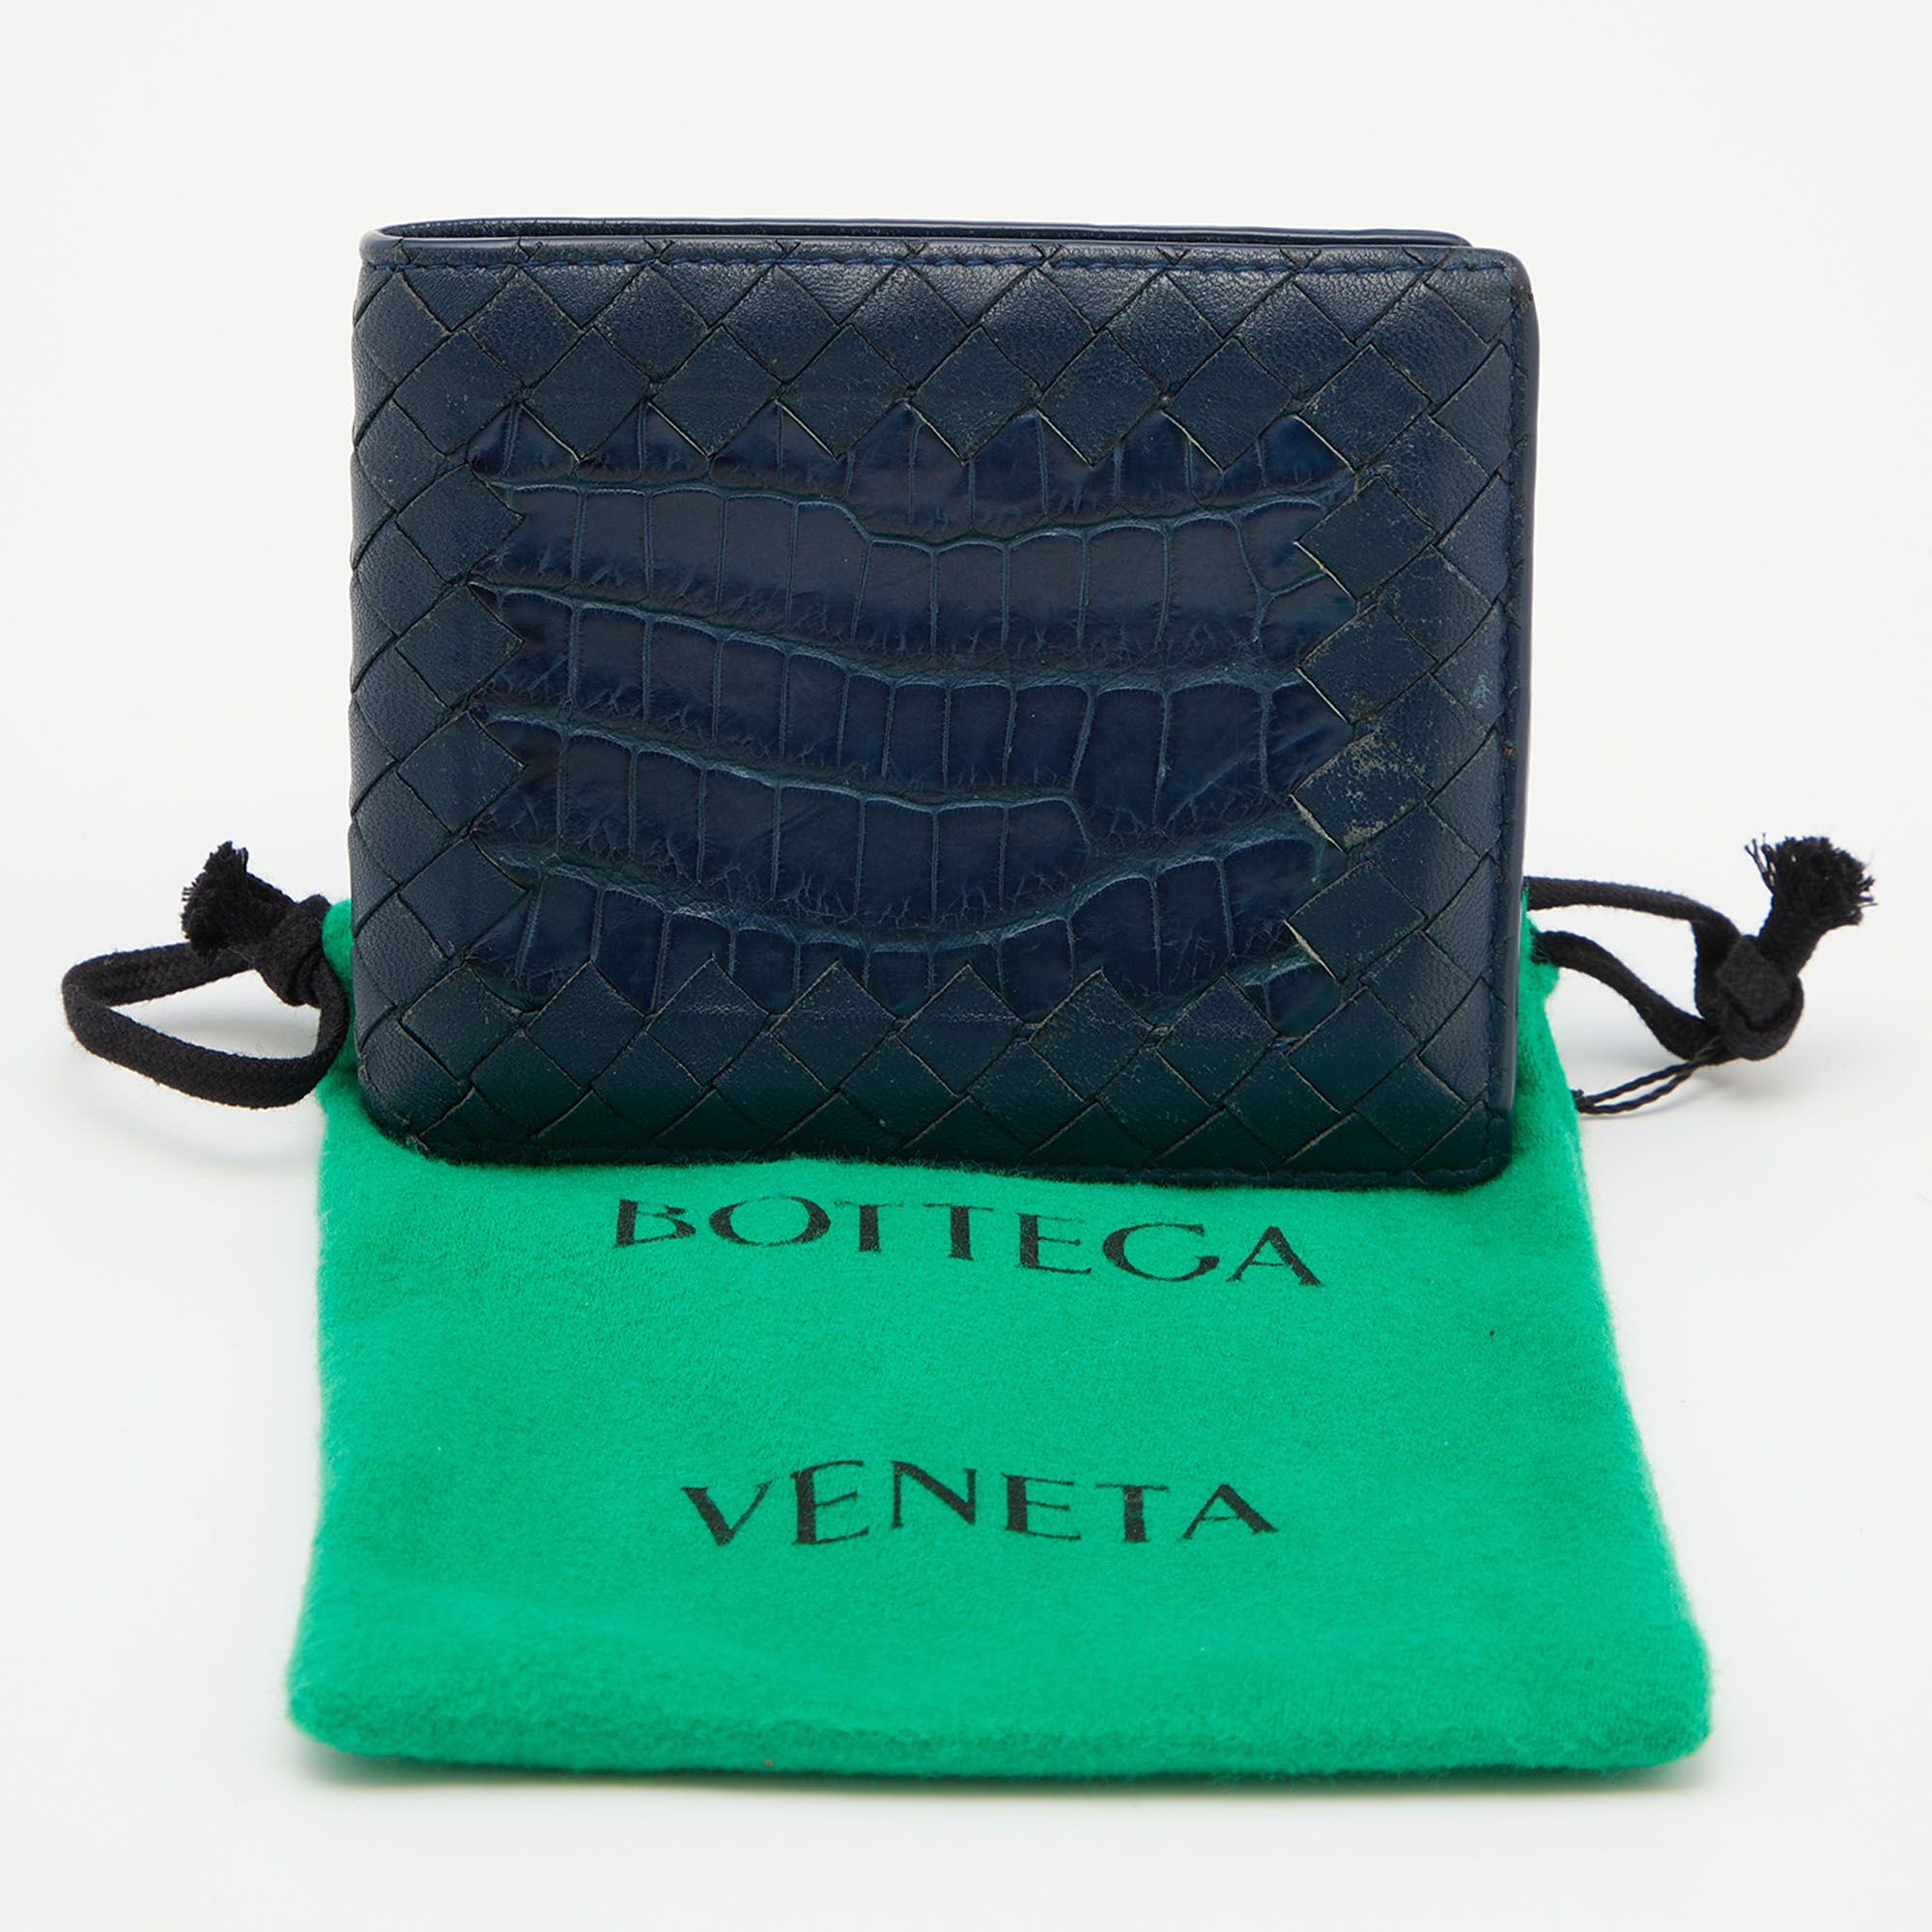 Bottega Veneta Blue Intrecciato Leather And Crocodile Bifold Wallet